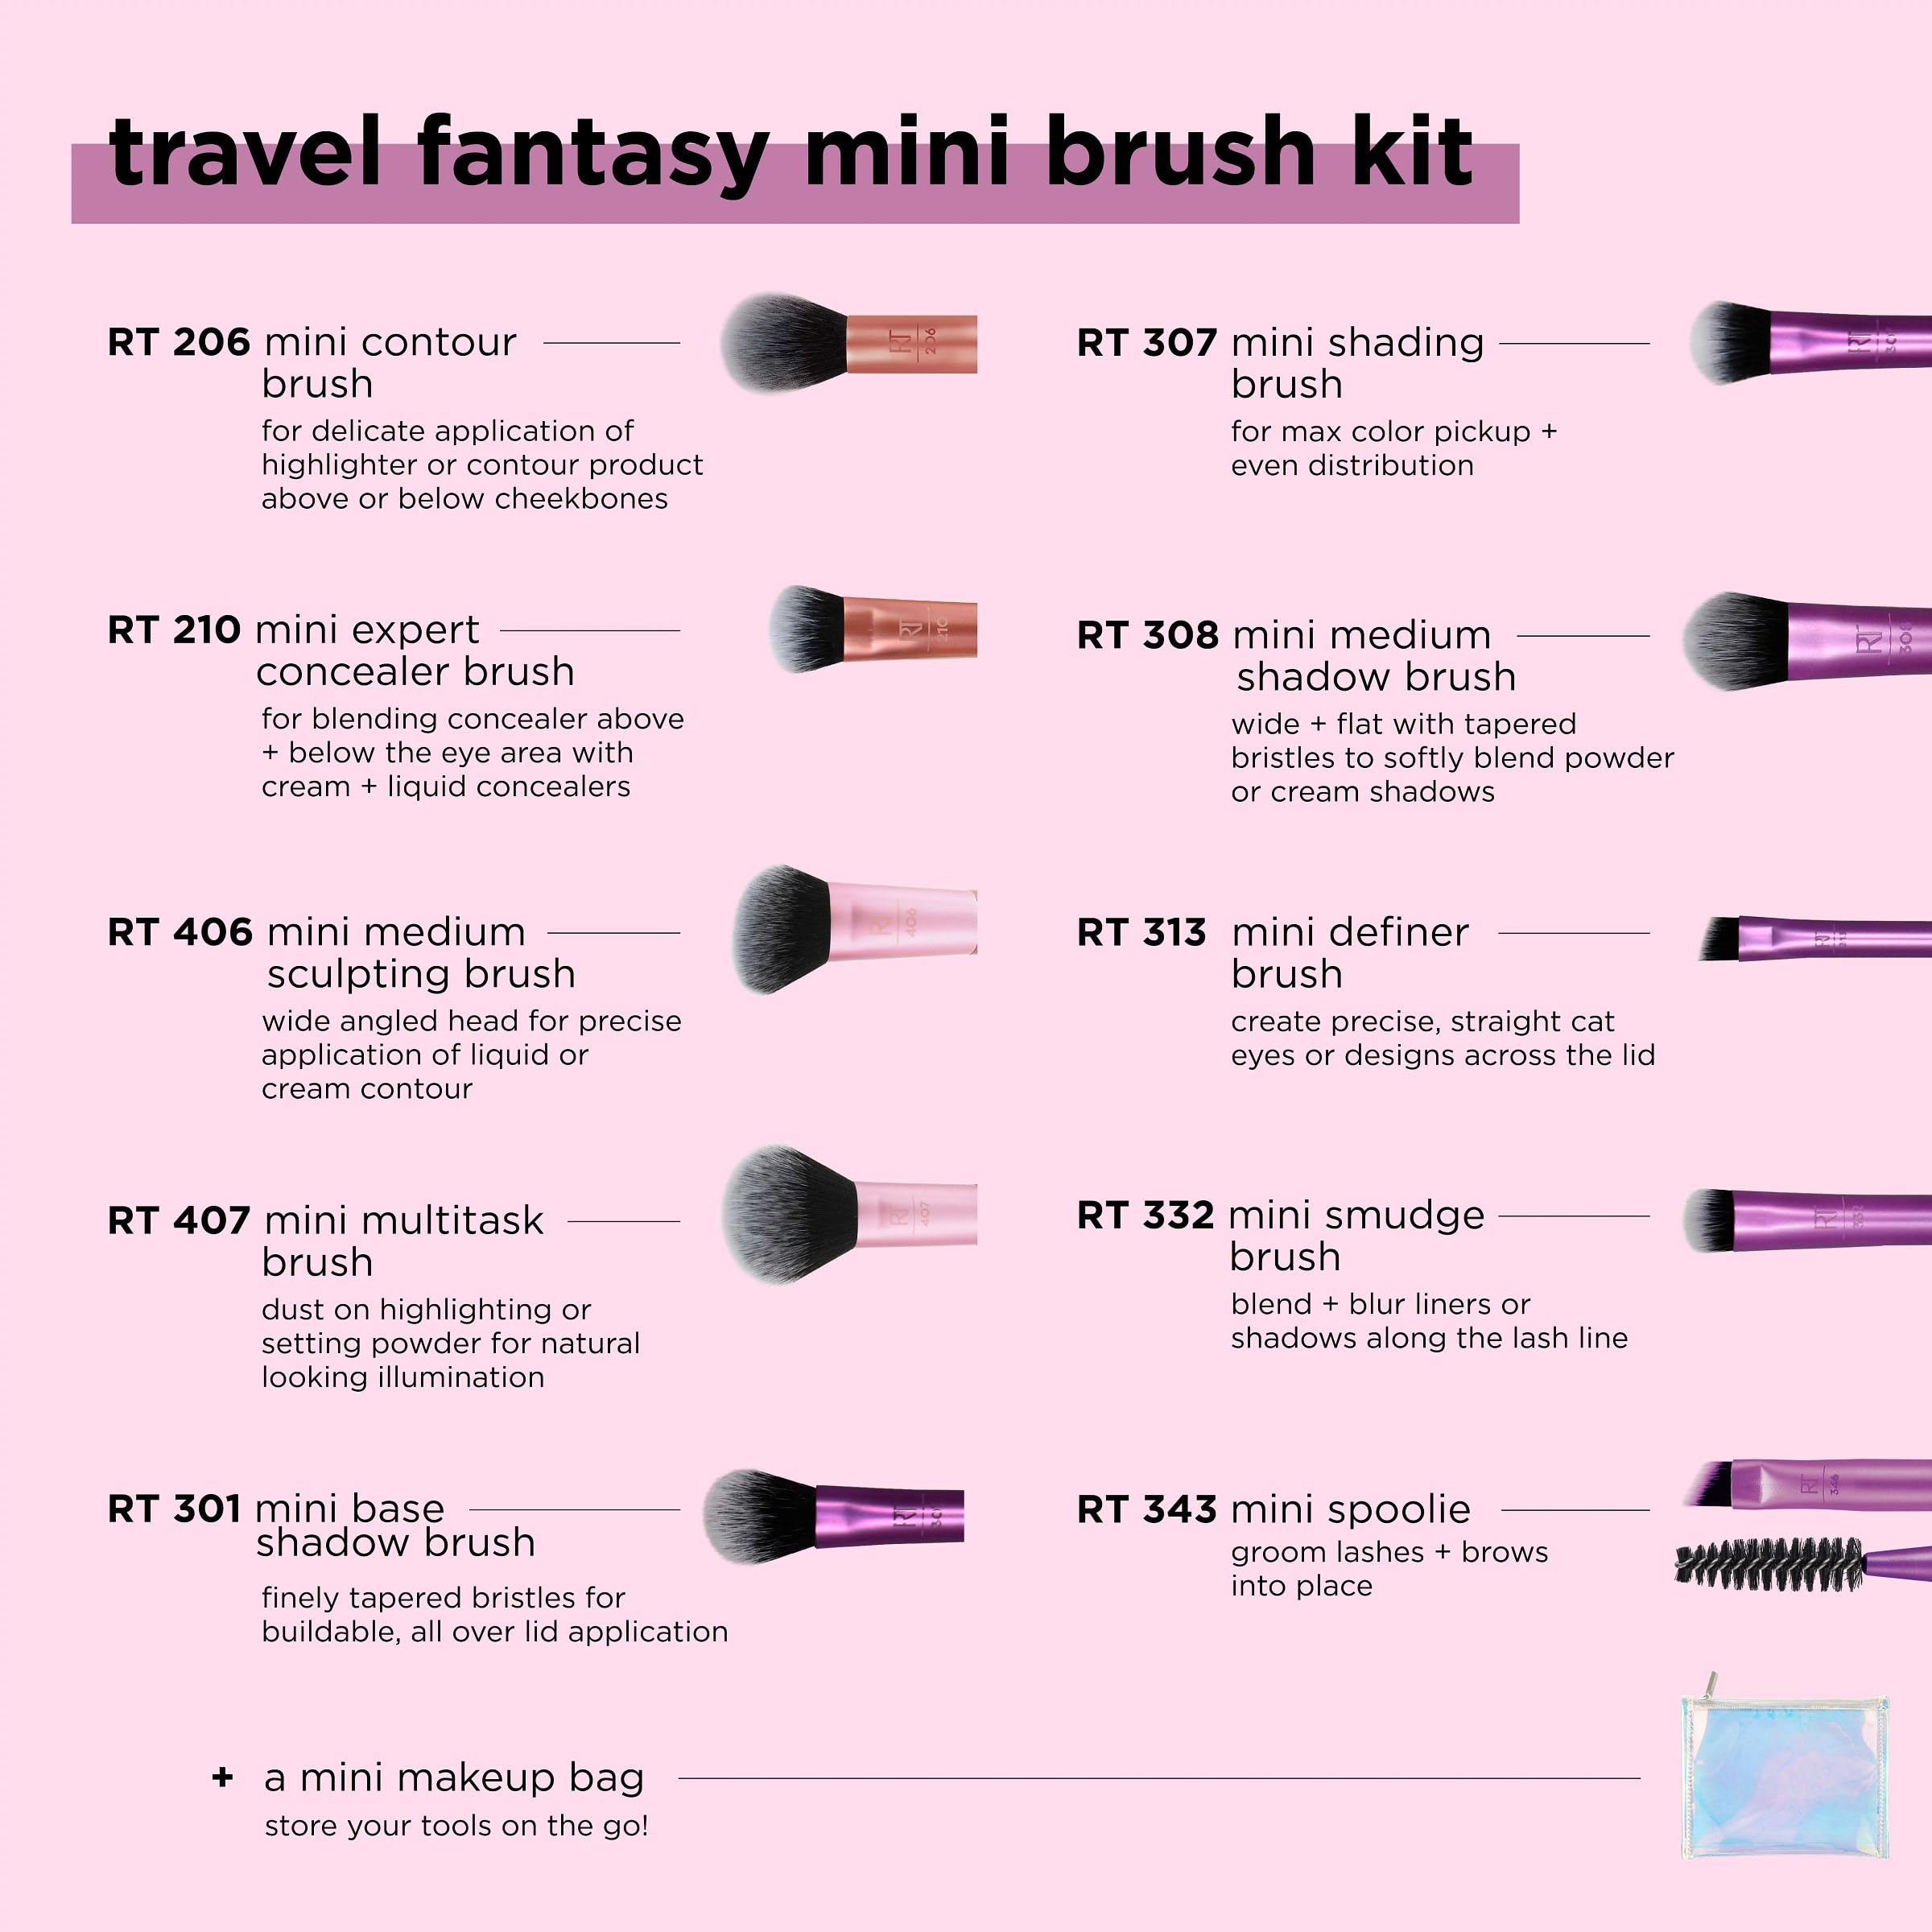 Real Technique Travel Fantasy Mini Brush Kit, Makeup Brushes For Eyeshadow, Highlight, Contour, Powder, & Concealer, Mini Sized Travel Brushes & Makeup Bag, Synthetic Bristles, 11 Piece Set